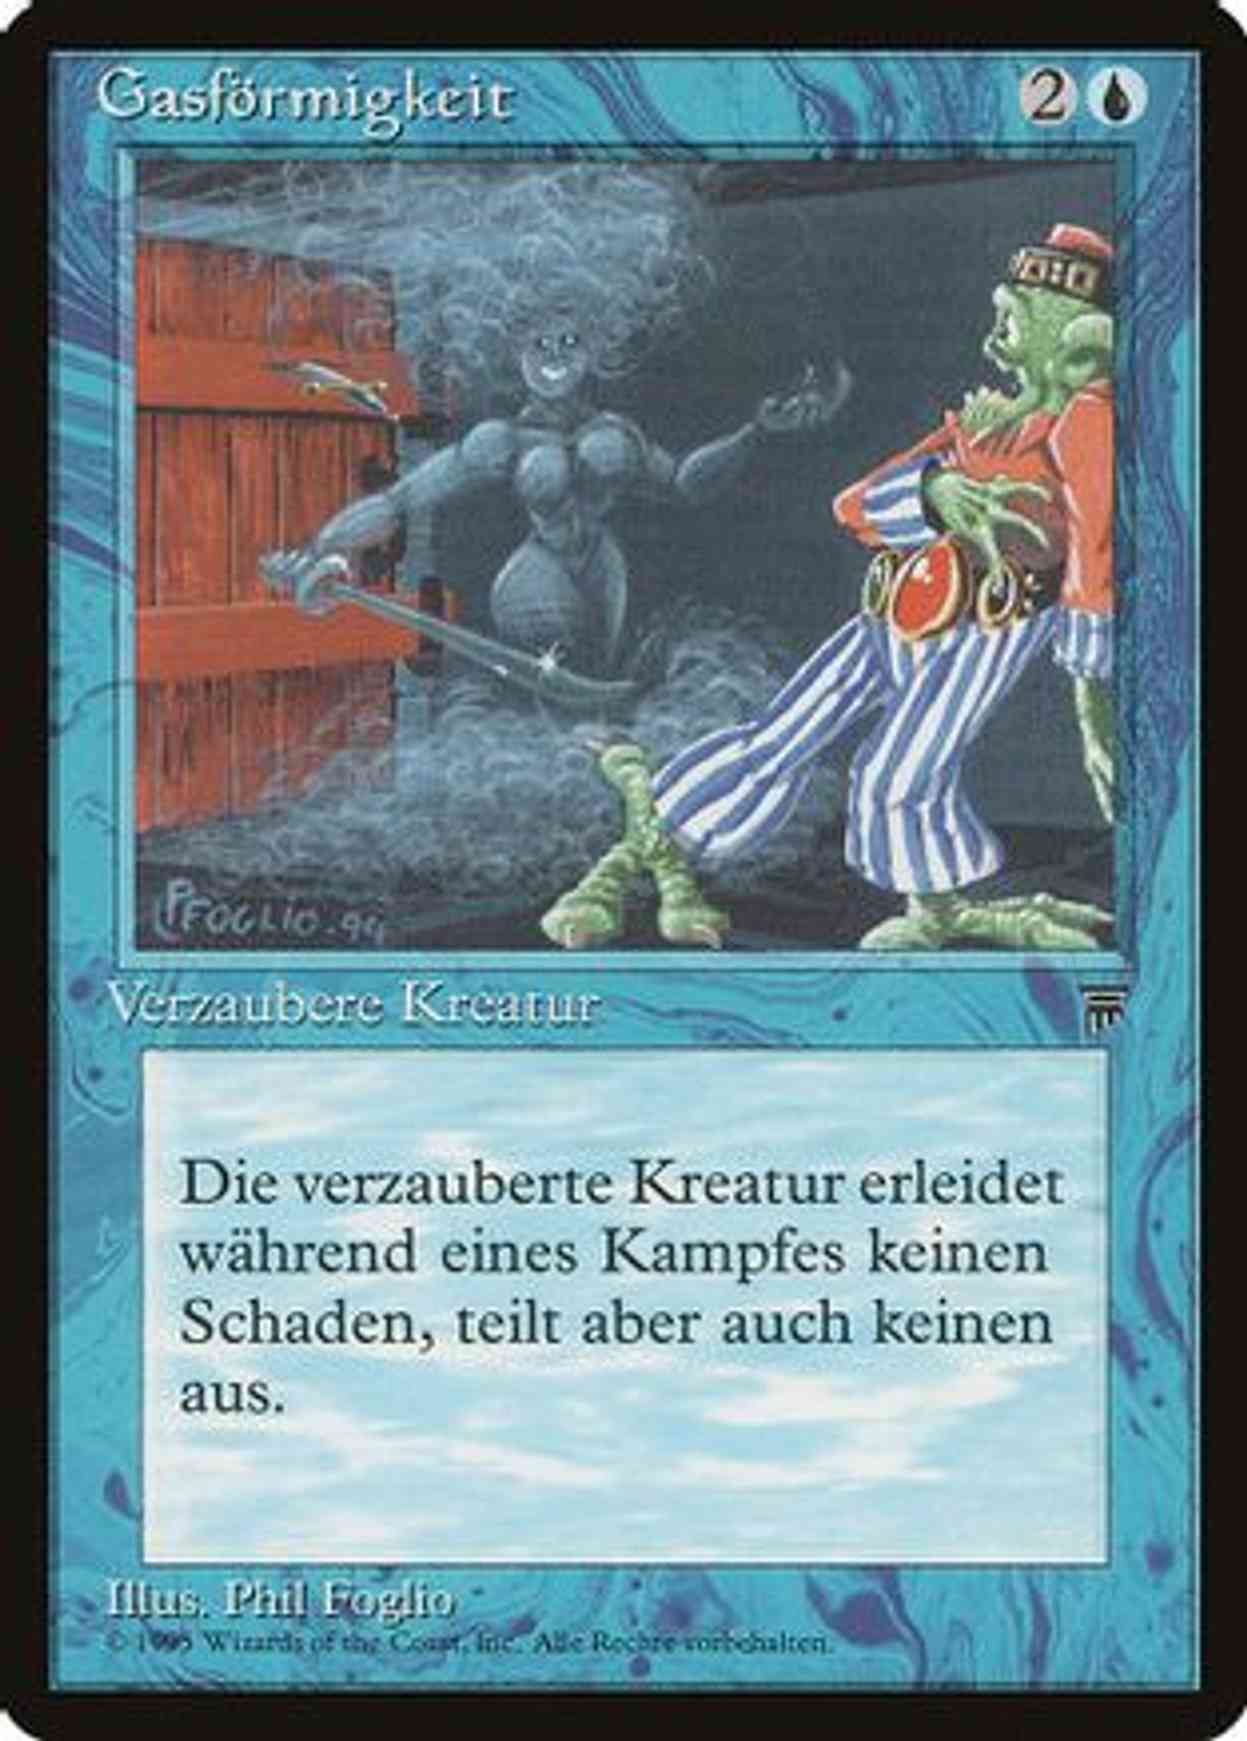 Gaseous Form (German) - "Gasformigkeit" magic card front